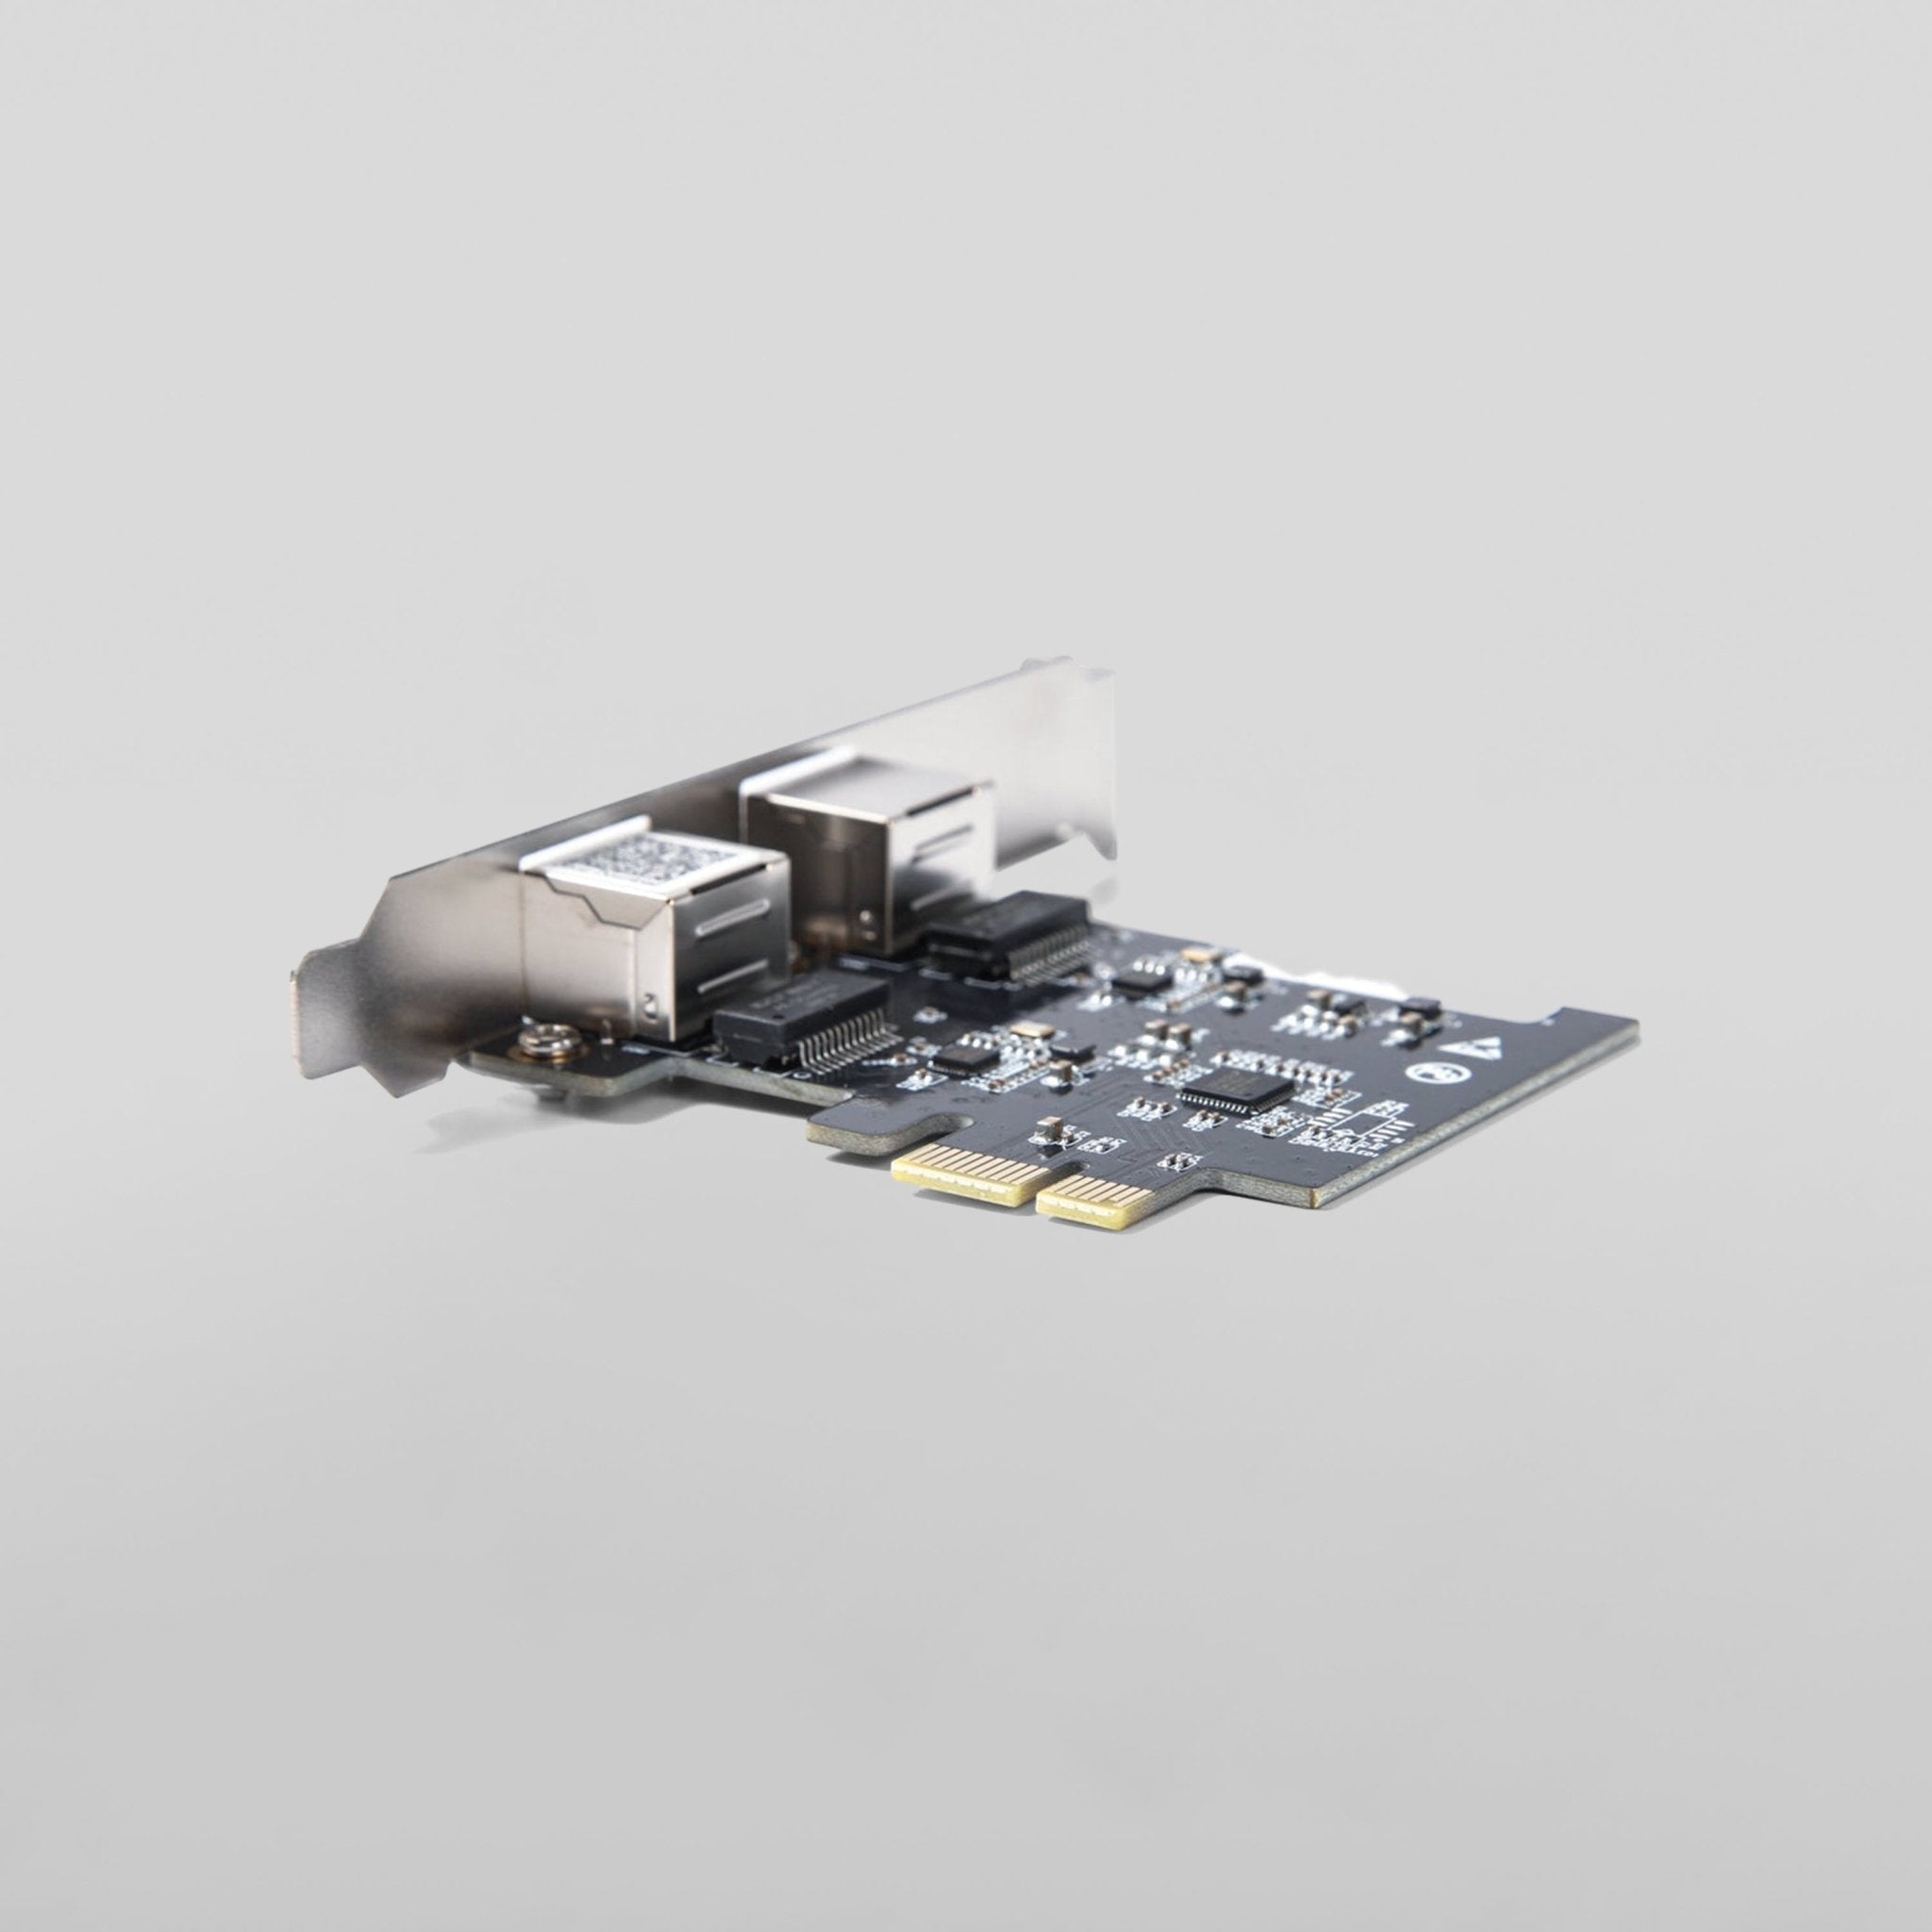 PCIe to Dual Port Gigabit Ethernet Adapter Realtek RTL8111 Chipset - Zima Store Online